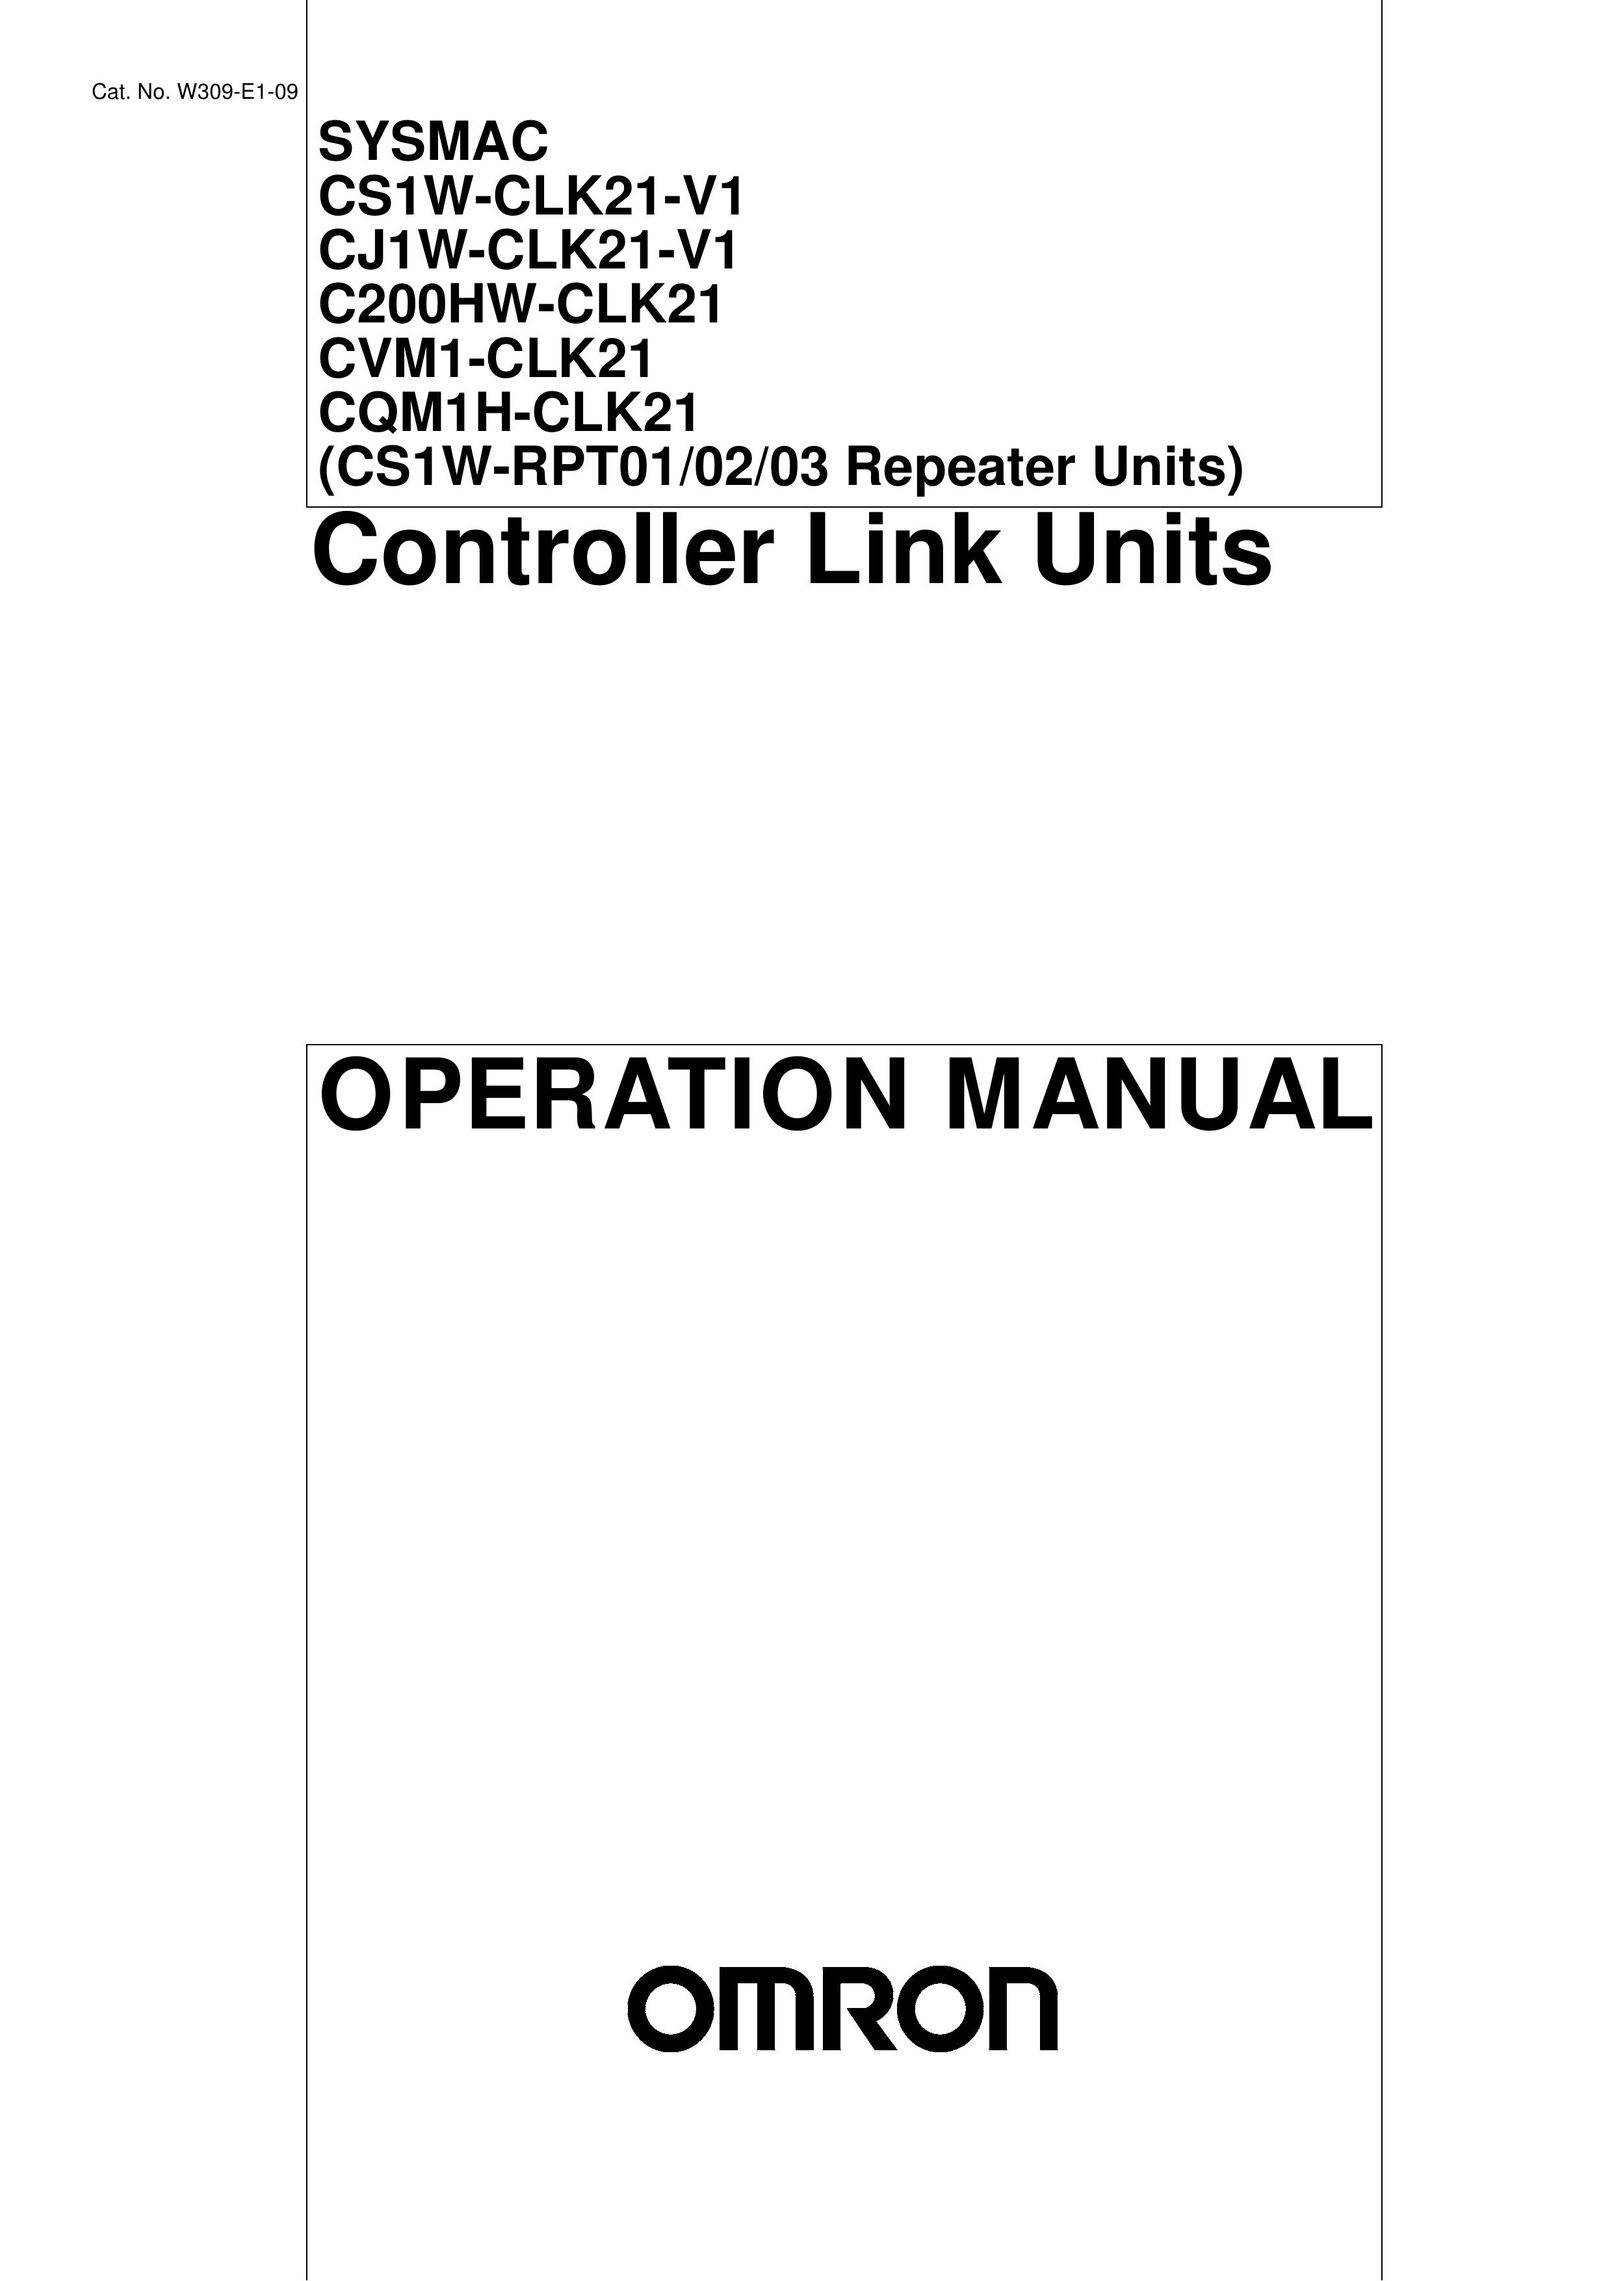 Omron CS1W-RPT01 Network Card User Manual